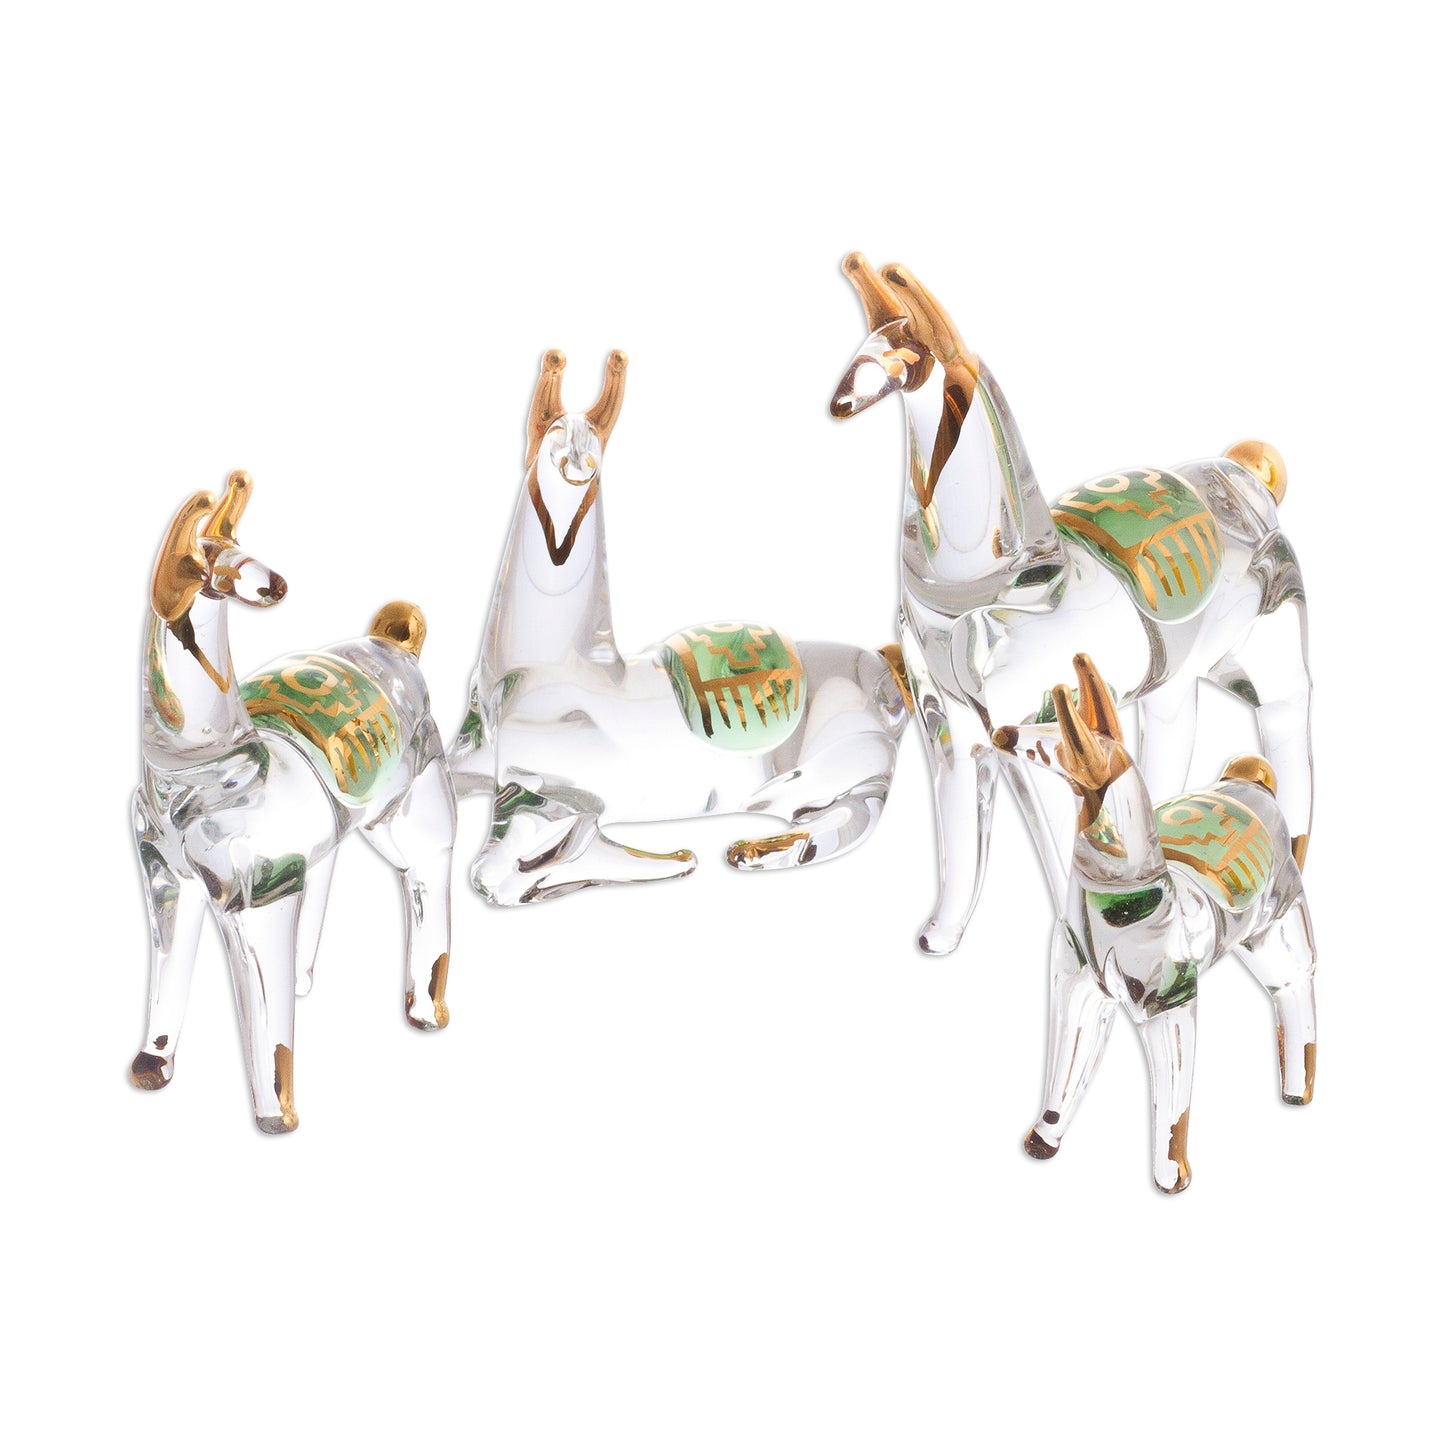 Llama Family Gilded Clear Glass Llama Figurines from Peru (Set of 4)